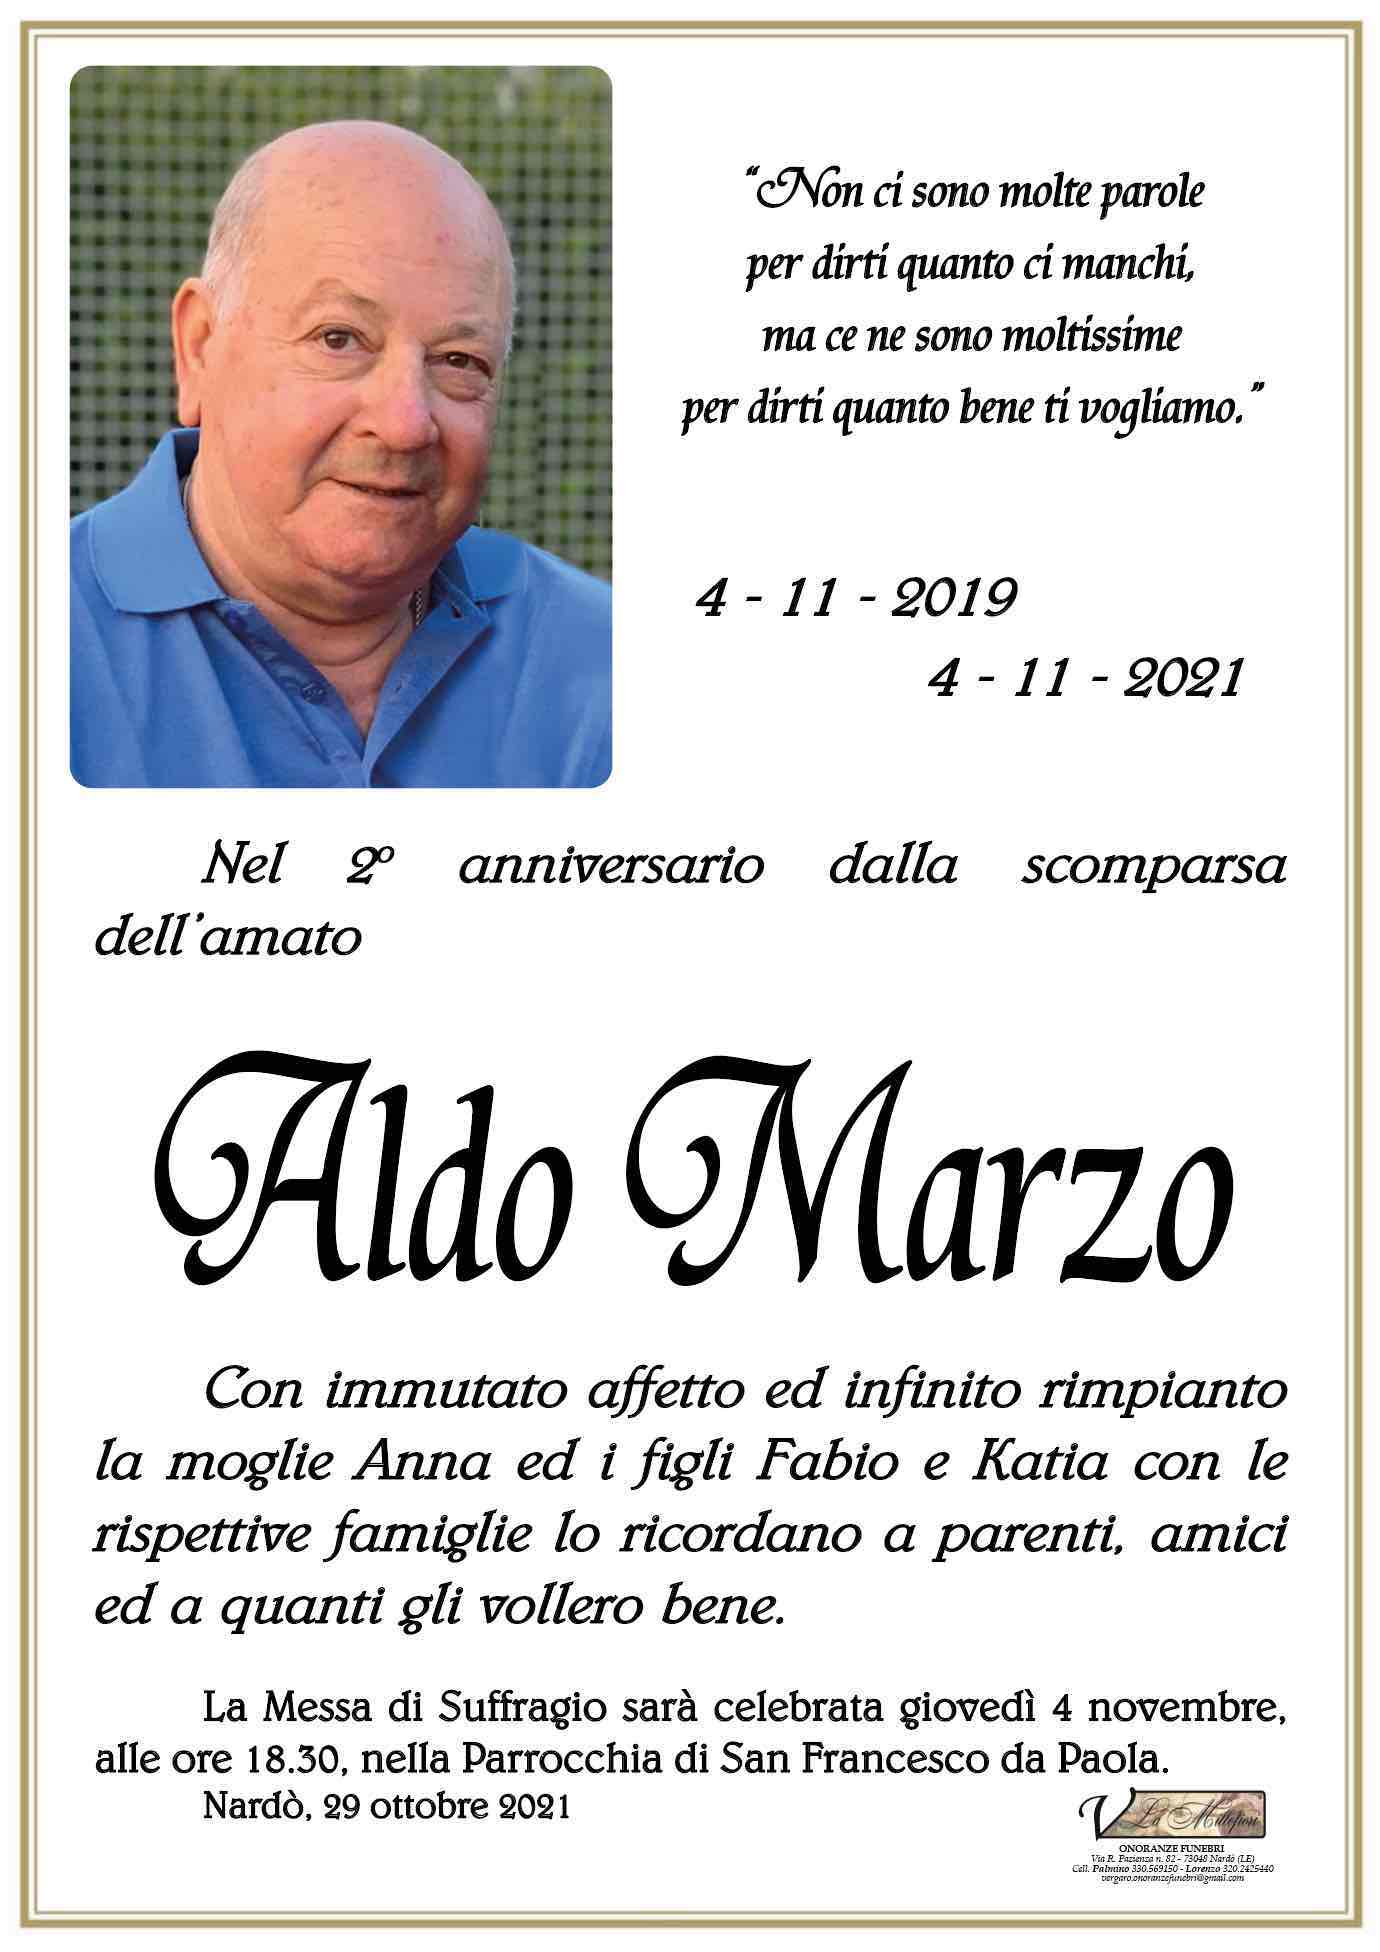 Aldo Marzo